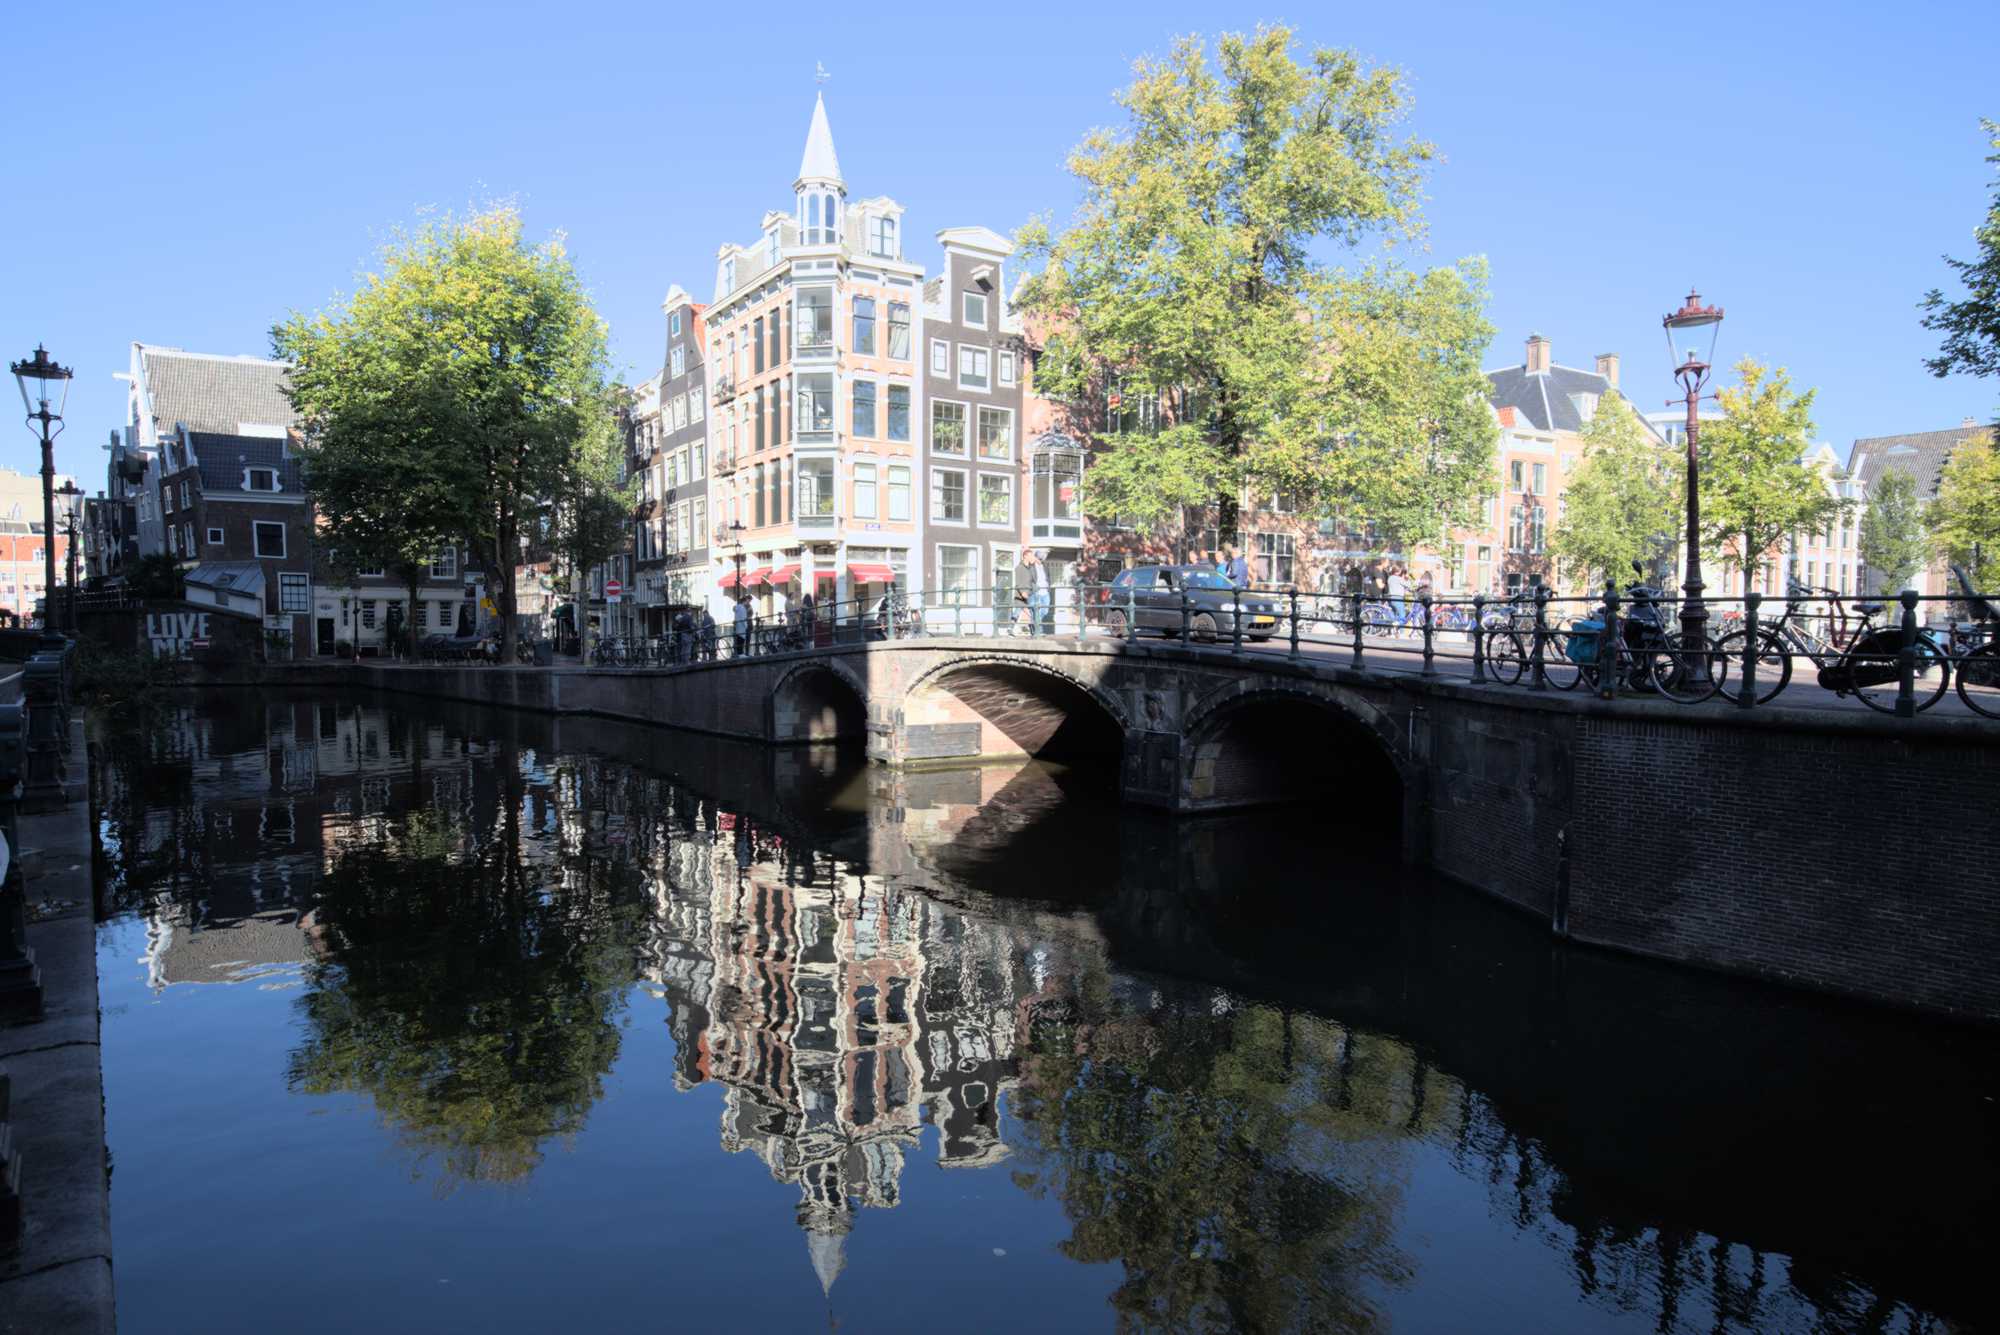 Lokation: Niederlande | Noord-Holland | Amsterdam | Centrum Kategorien: Gebäude, Datum: 27.09.2018